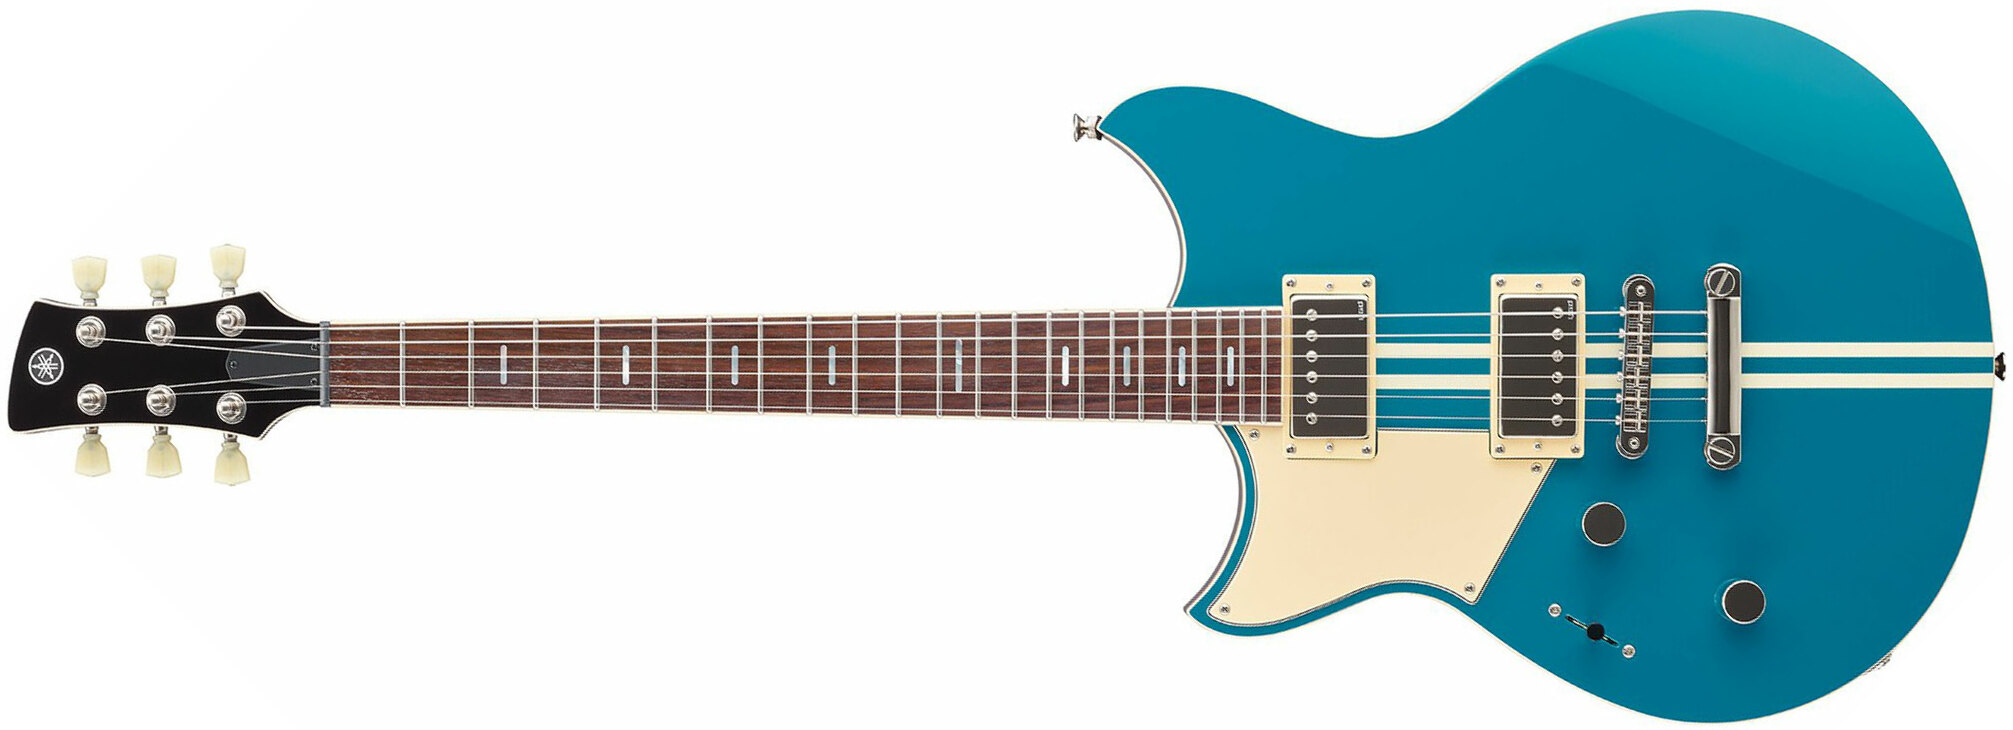 Yamaha Rss20l Revstar Standard Lh Gaucher Hh Ht Rw - Swift Blue - Left-handed electric guitar - Main picture